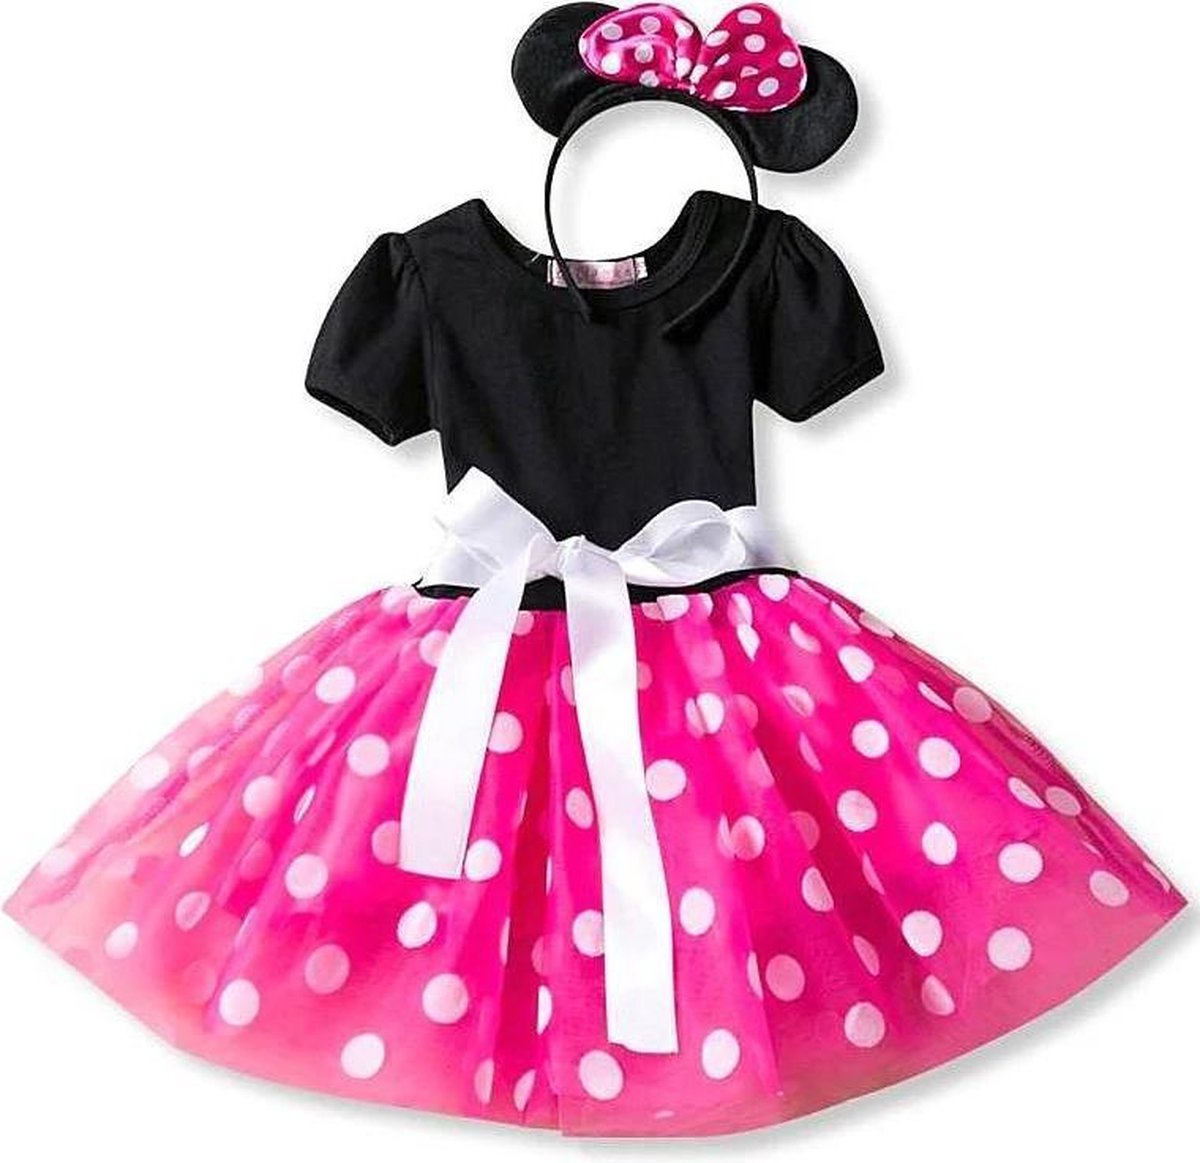 Minnie Mouse jurk roze witte stip meisjes prinsessen jurk maat 110-116 (120) + haarband verkleedkleding